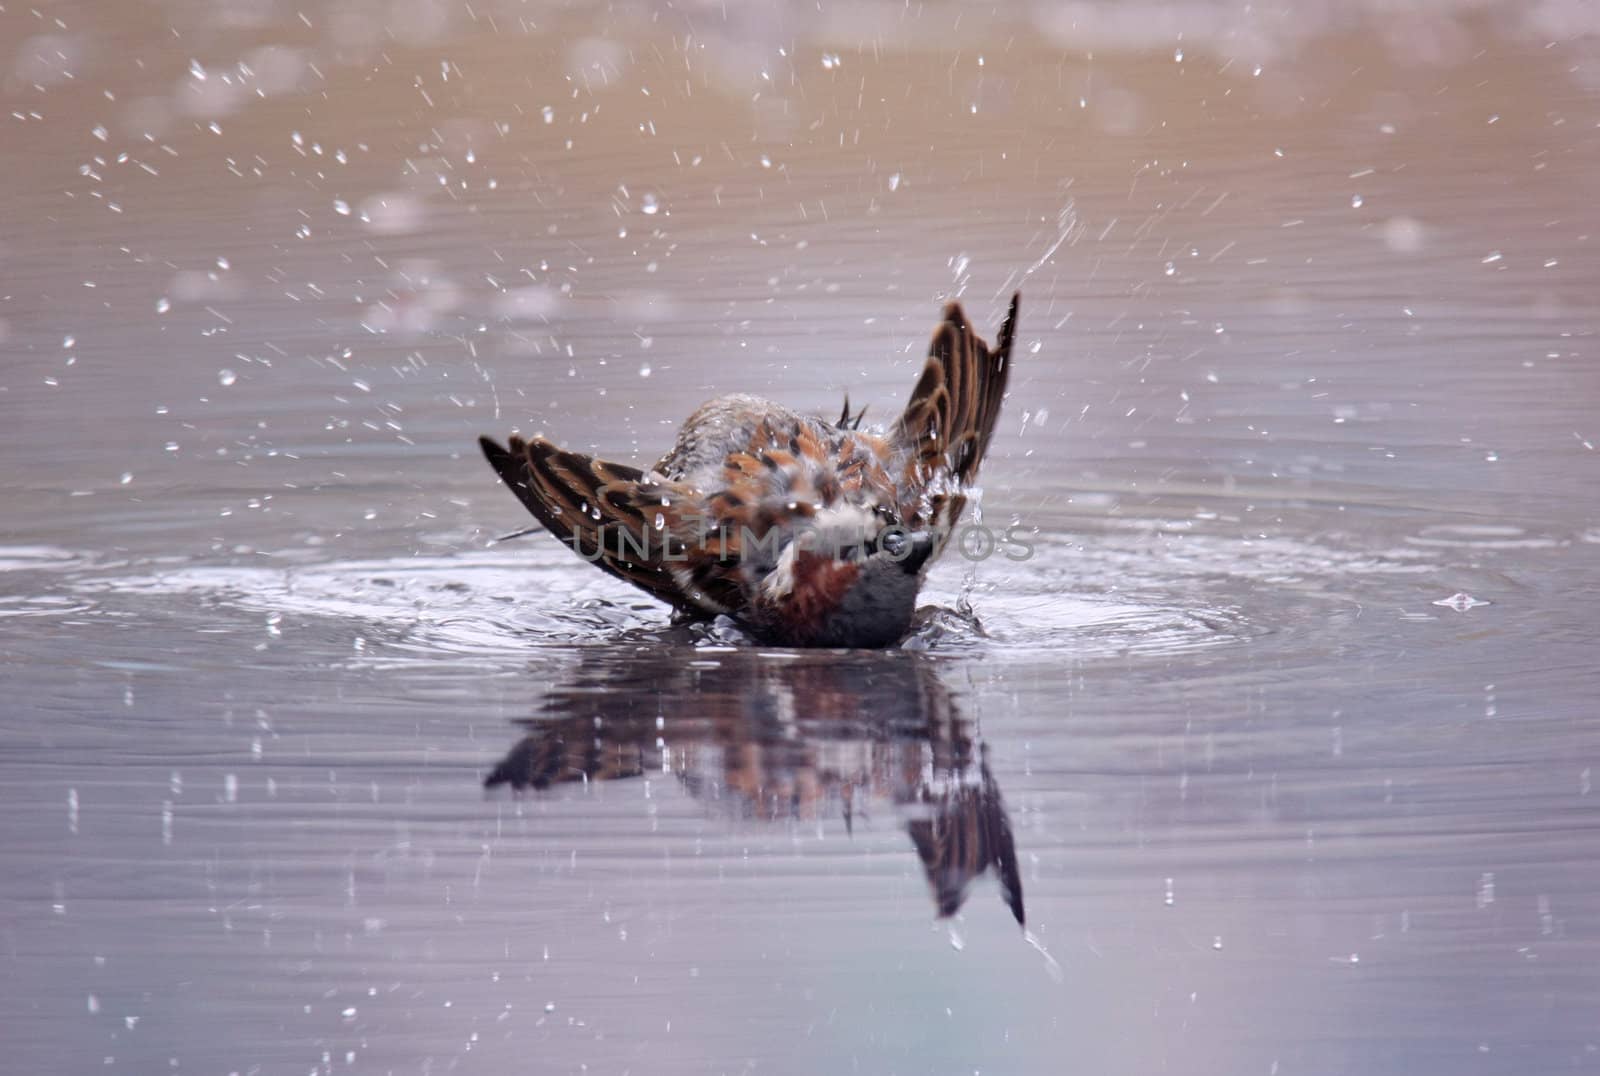 A bird taking a bath in a pool of water. Splashing water.